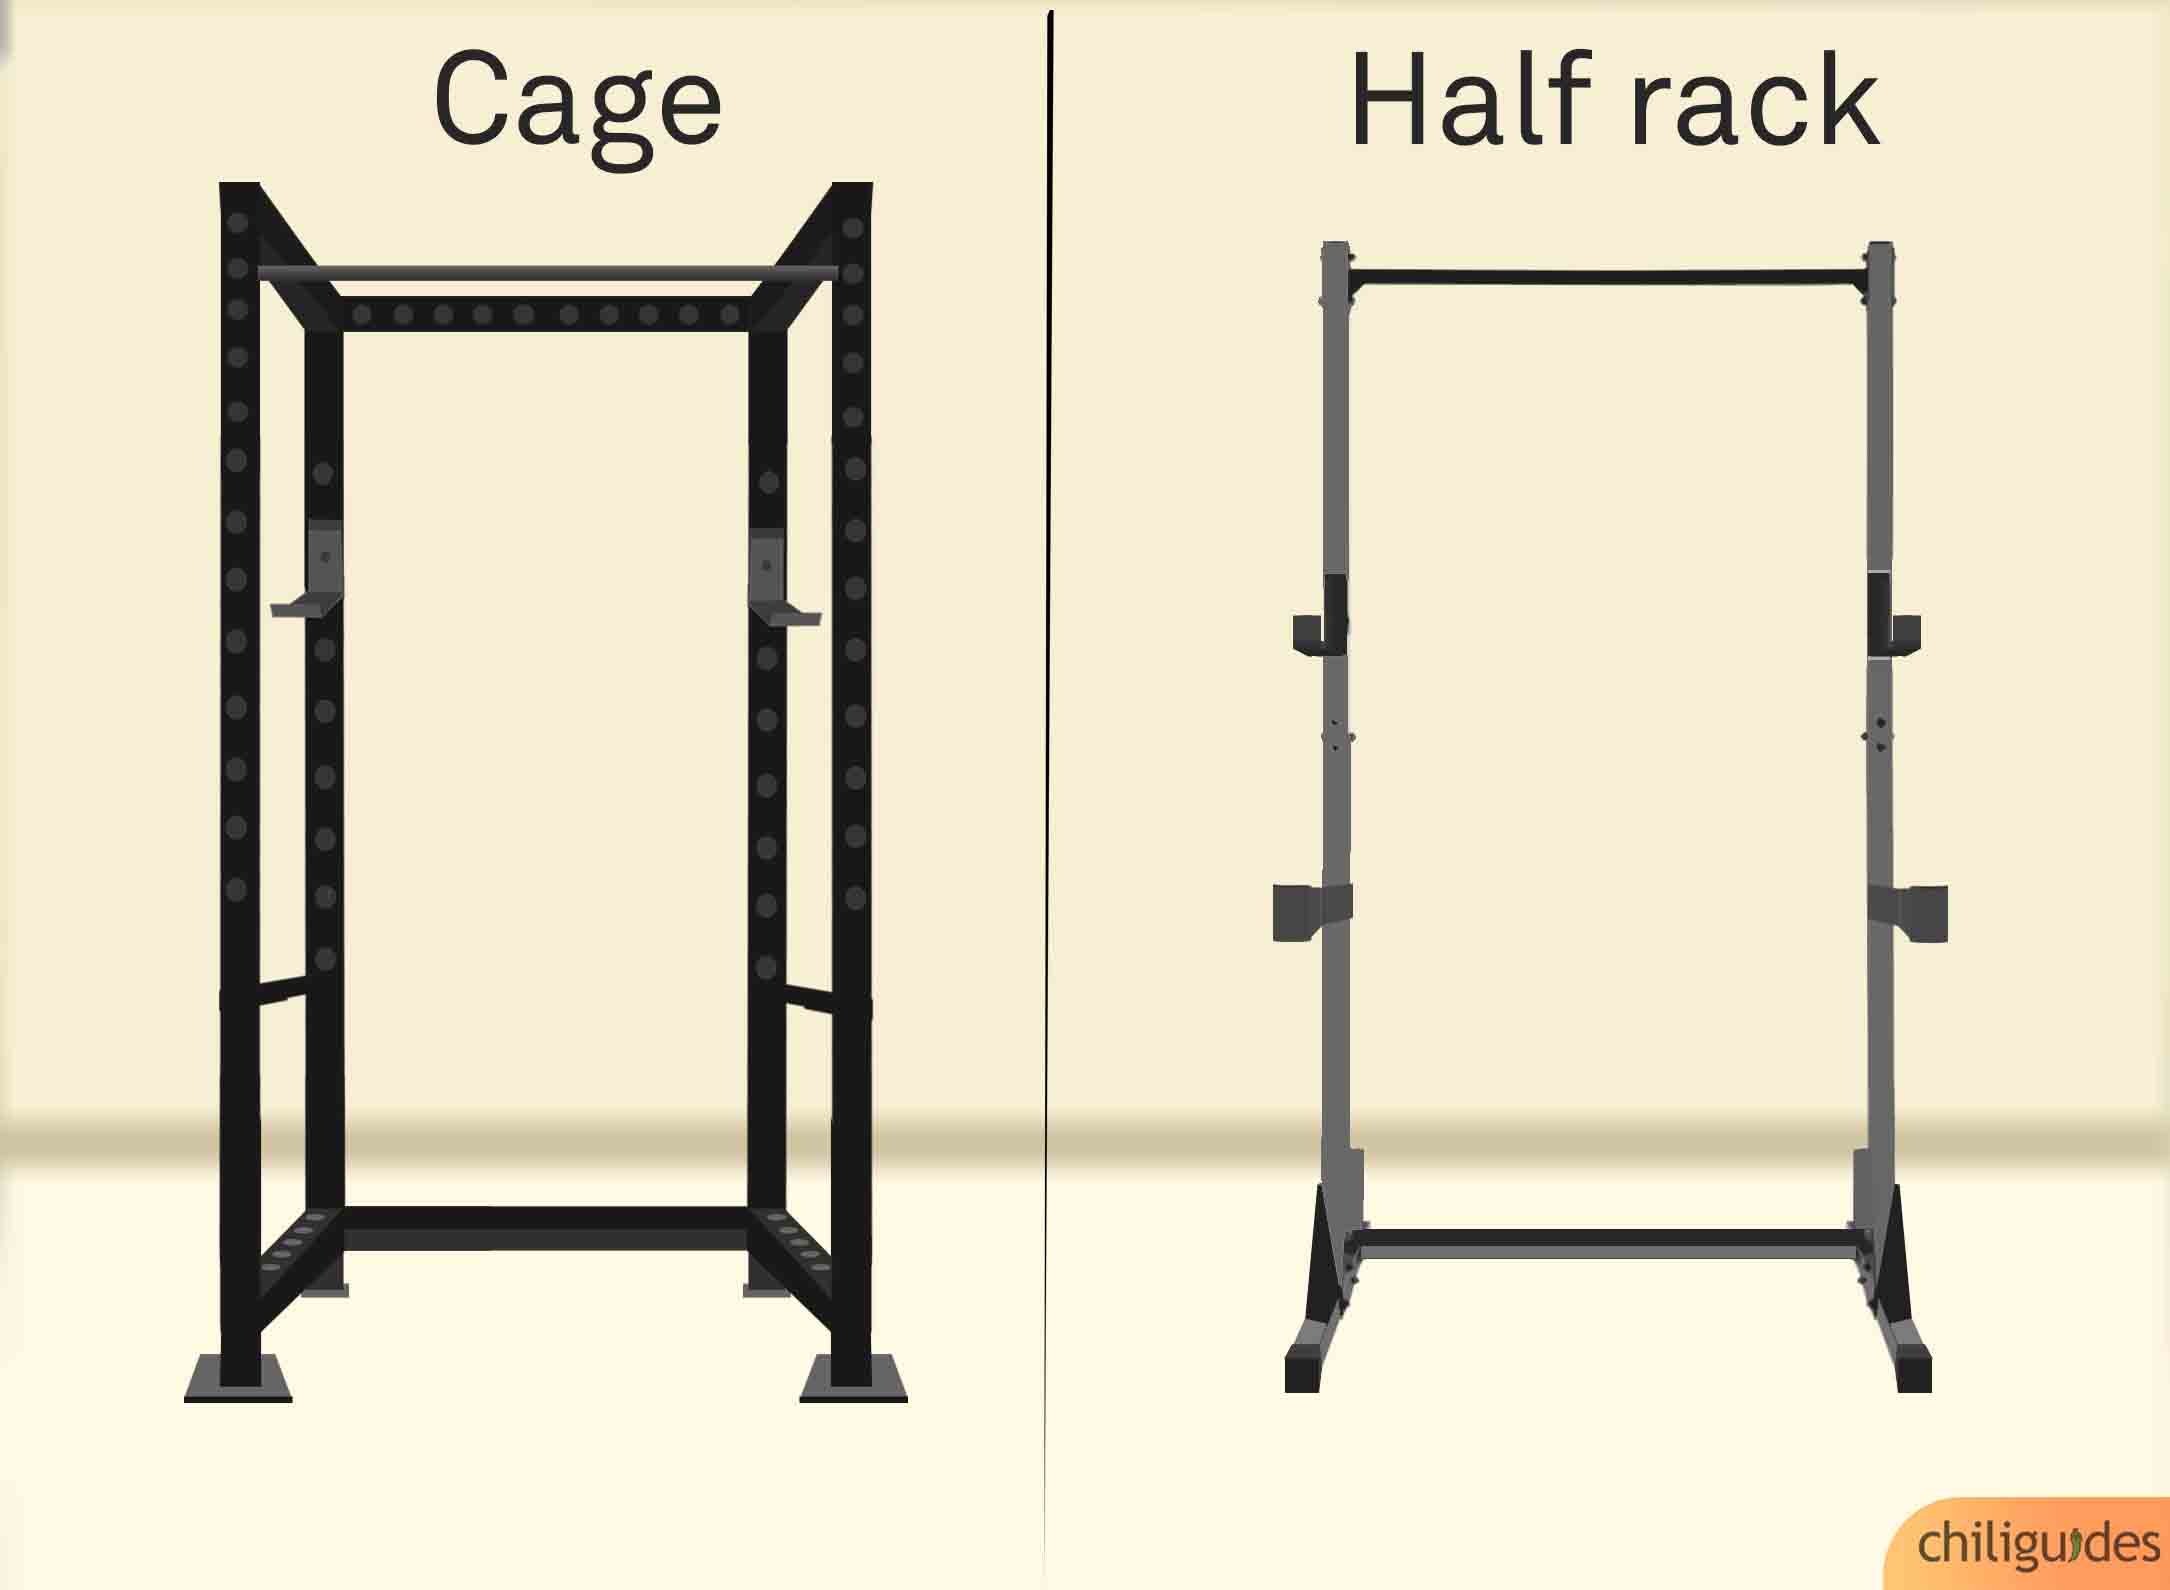 Half rack vs. Cage